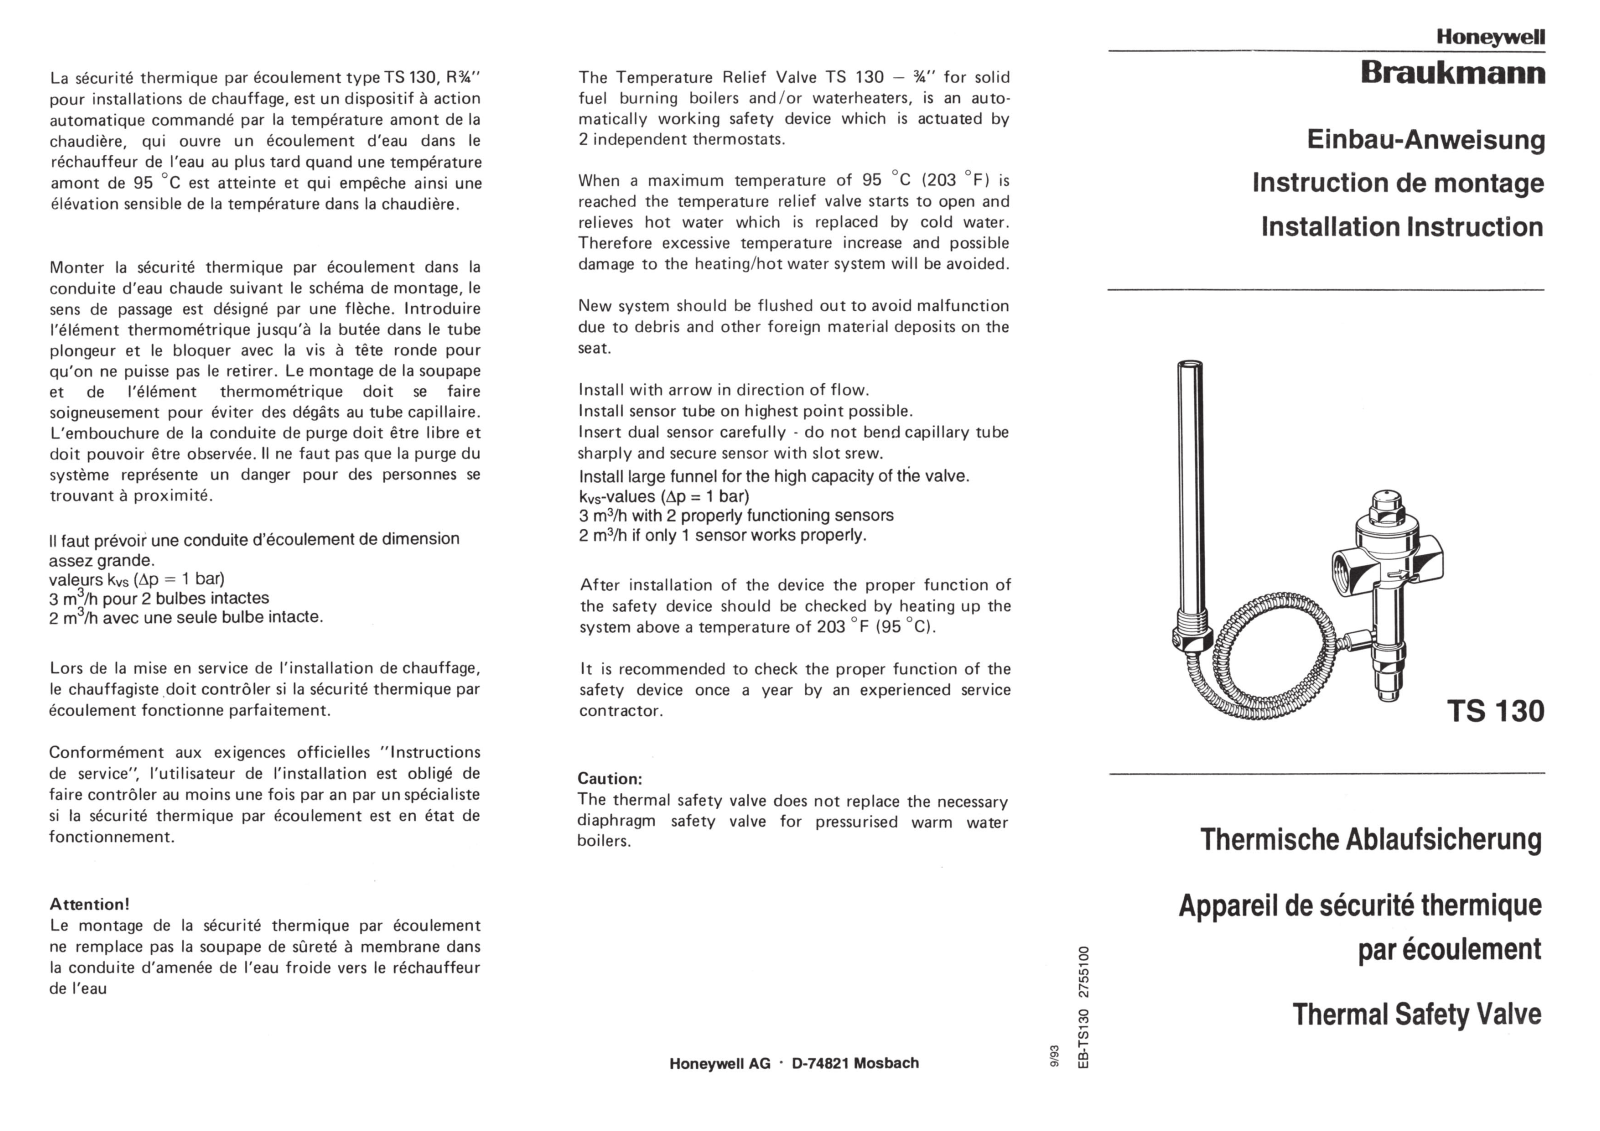 Honeywell TS 130 Installation Instructions